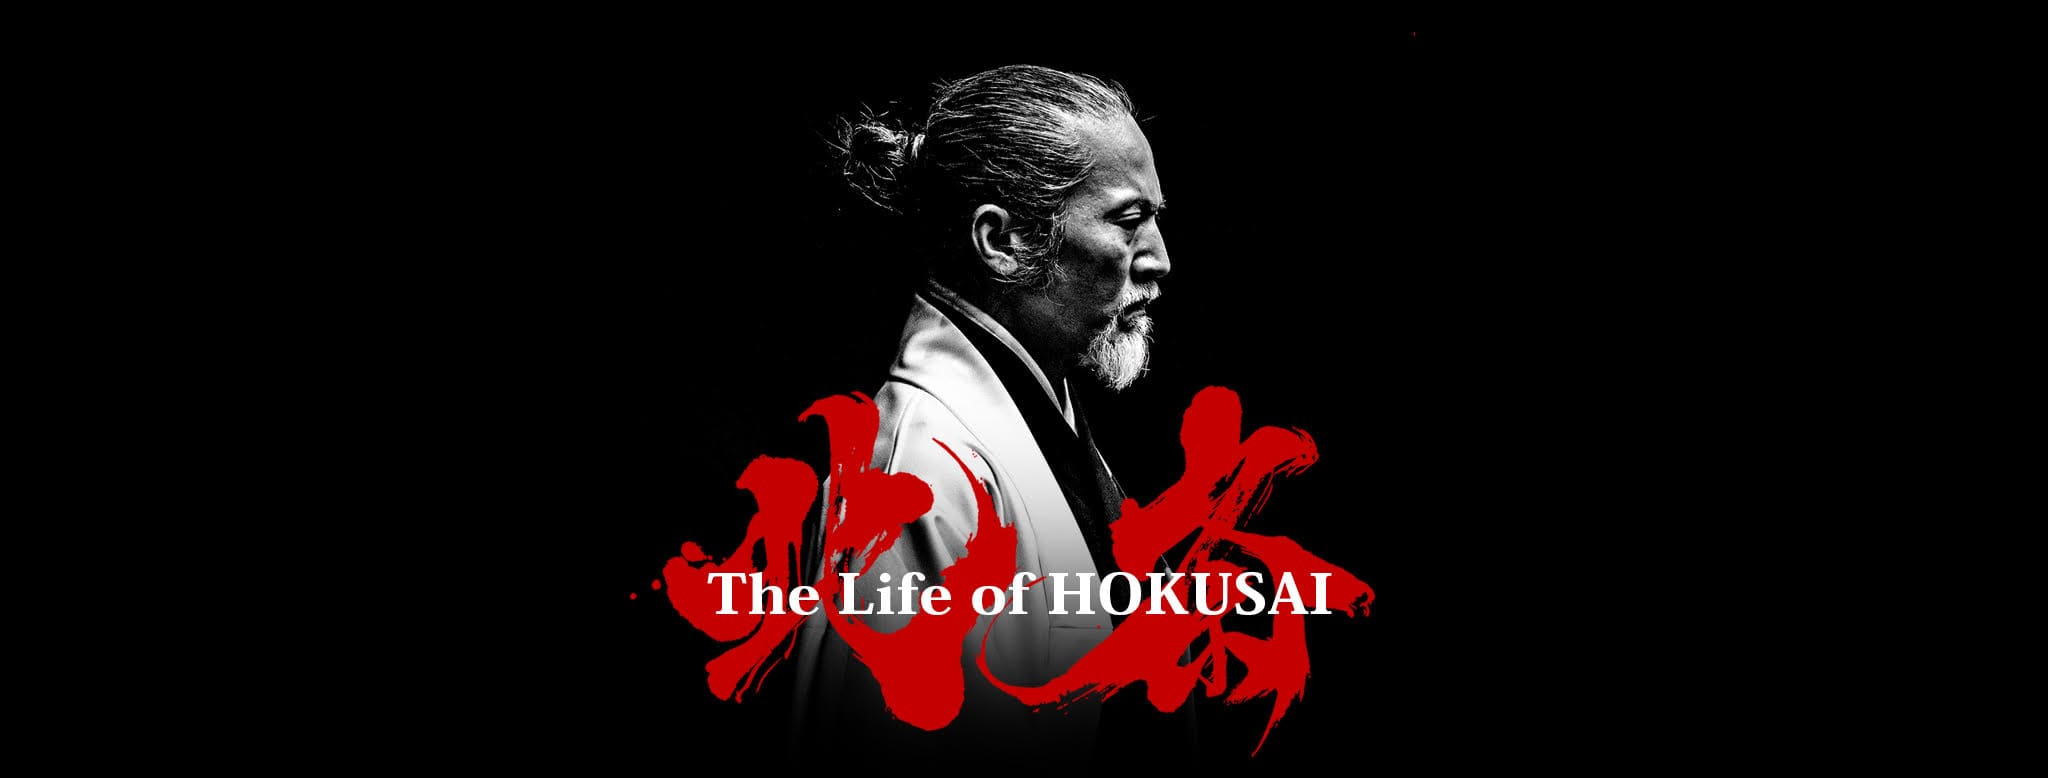 The Life of HOKUSAI